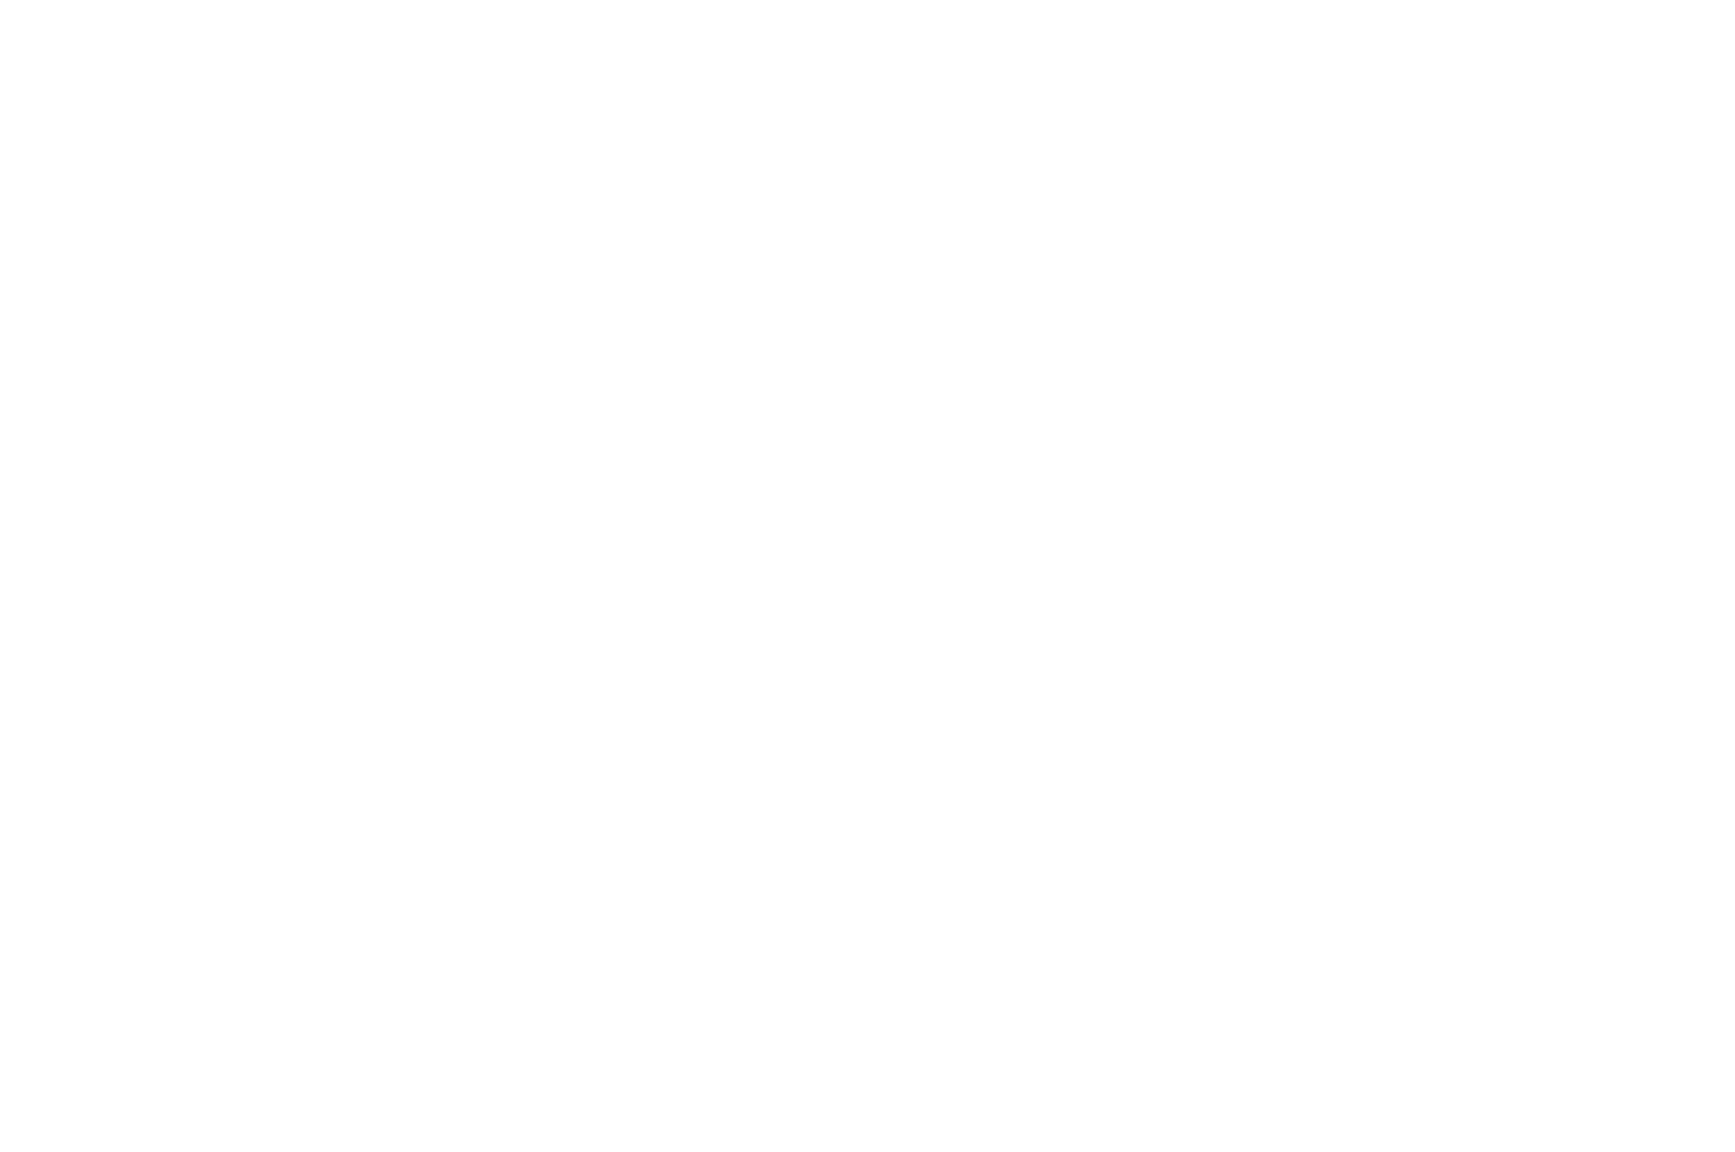 OFFICIAL SELECTION - Burbank International Film Festival - 2019